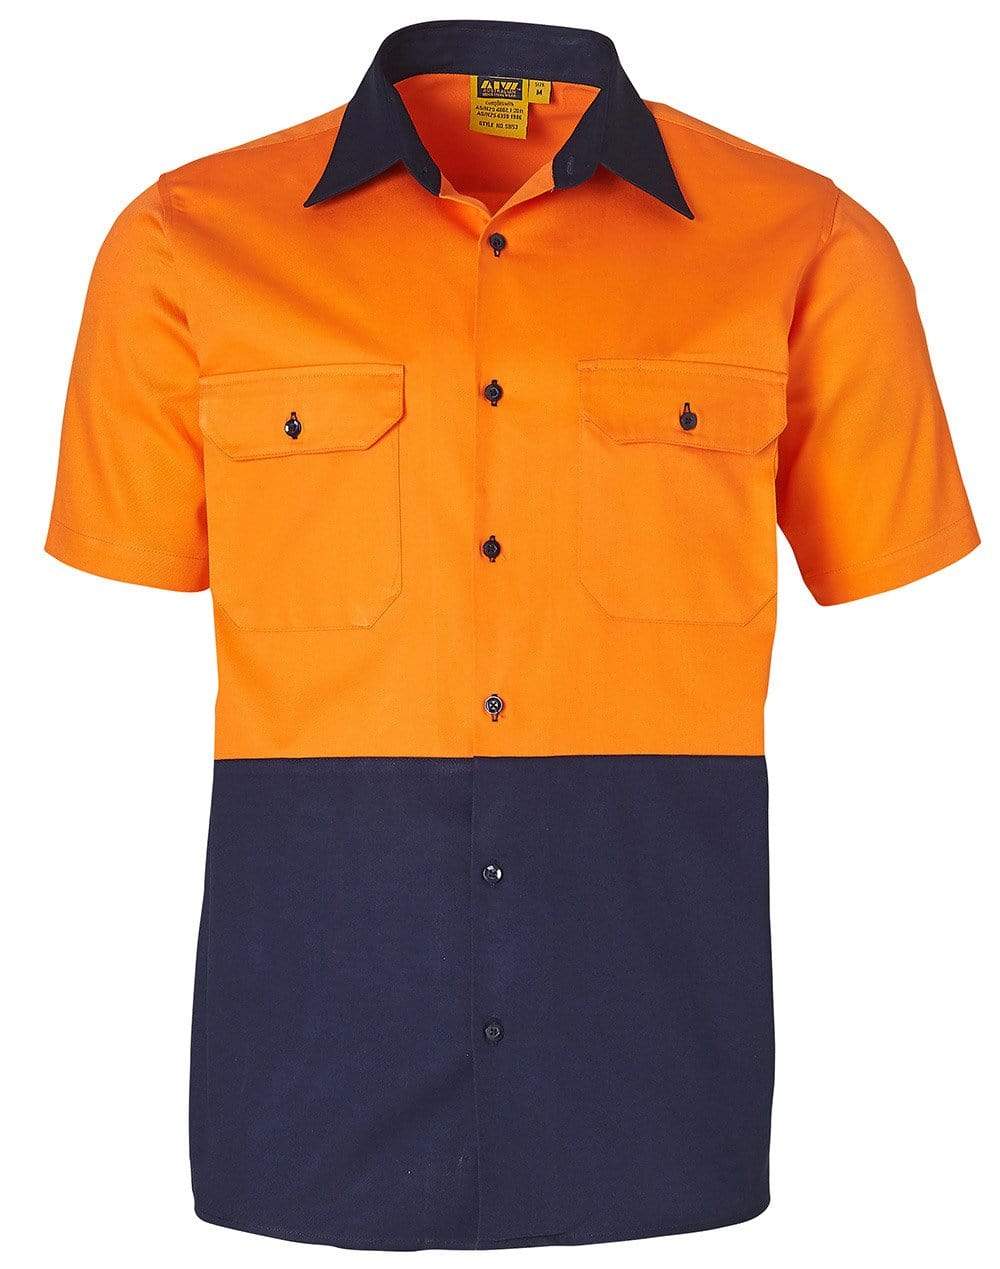 Cotton Drill Safety Shirt SW53 Work Wear Australian Industrial Wear S Fluoro Orange/Navy 